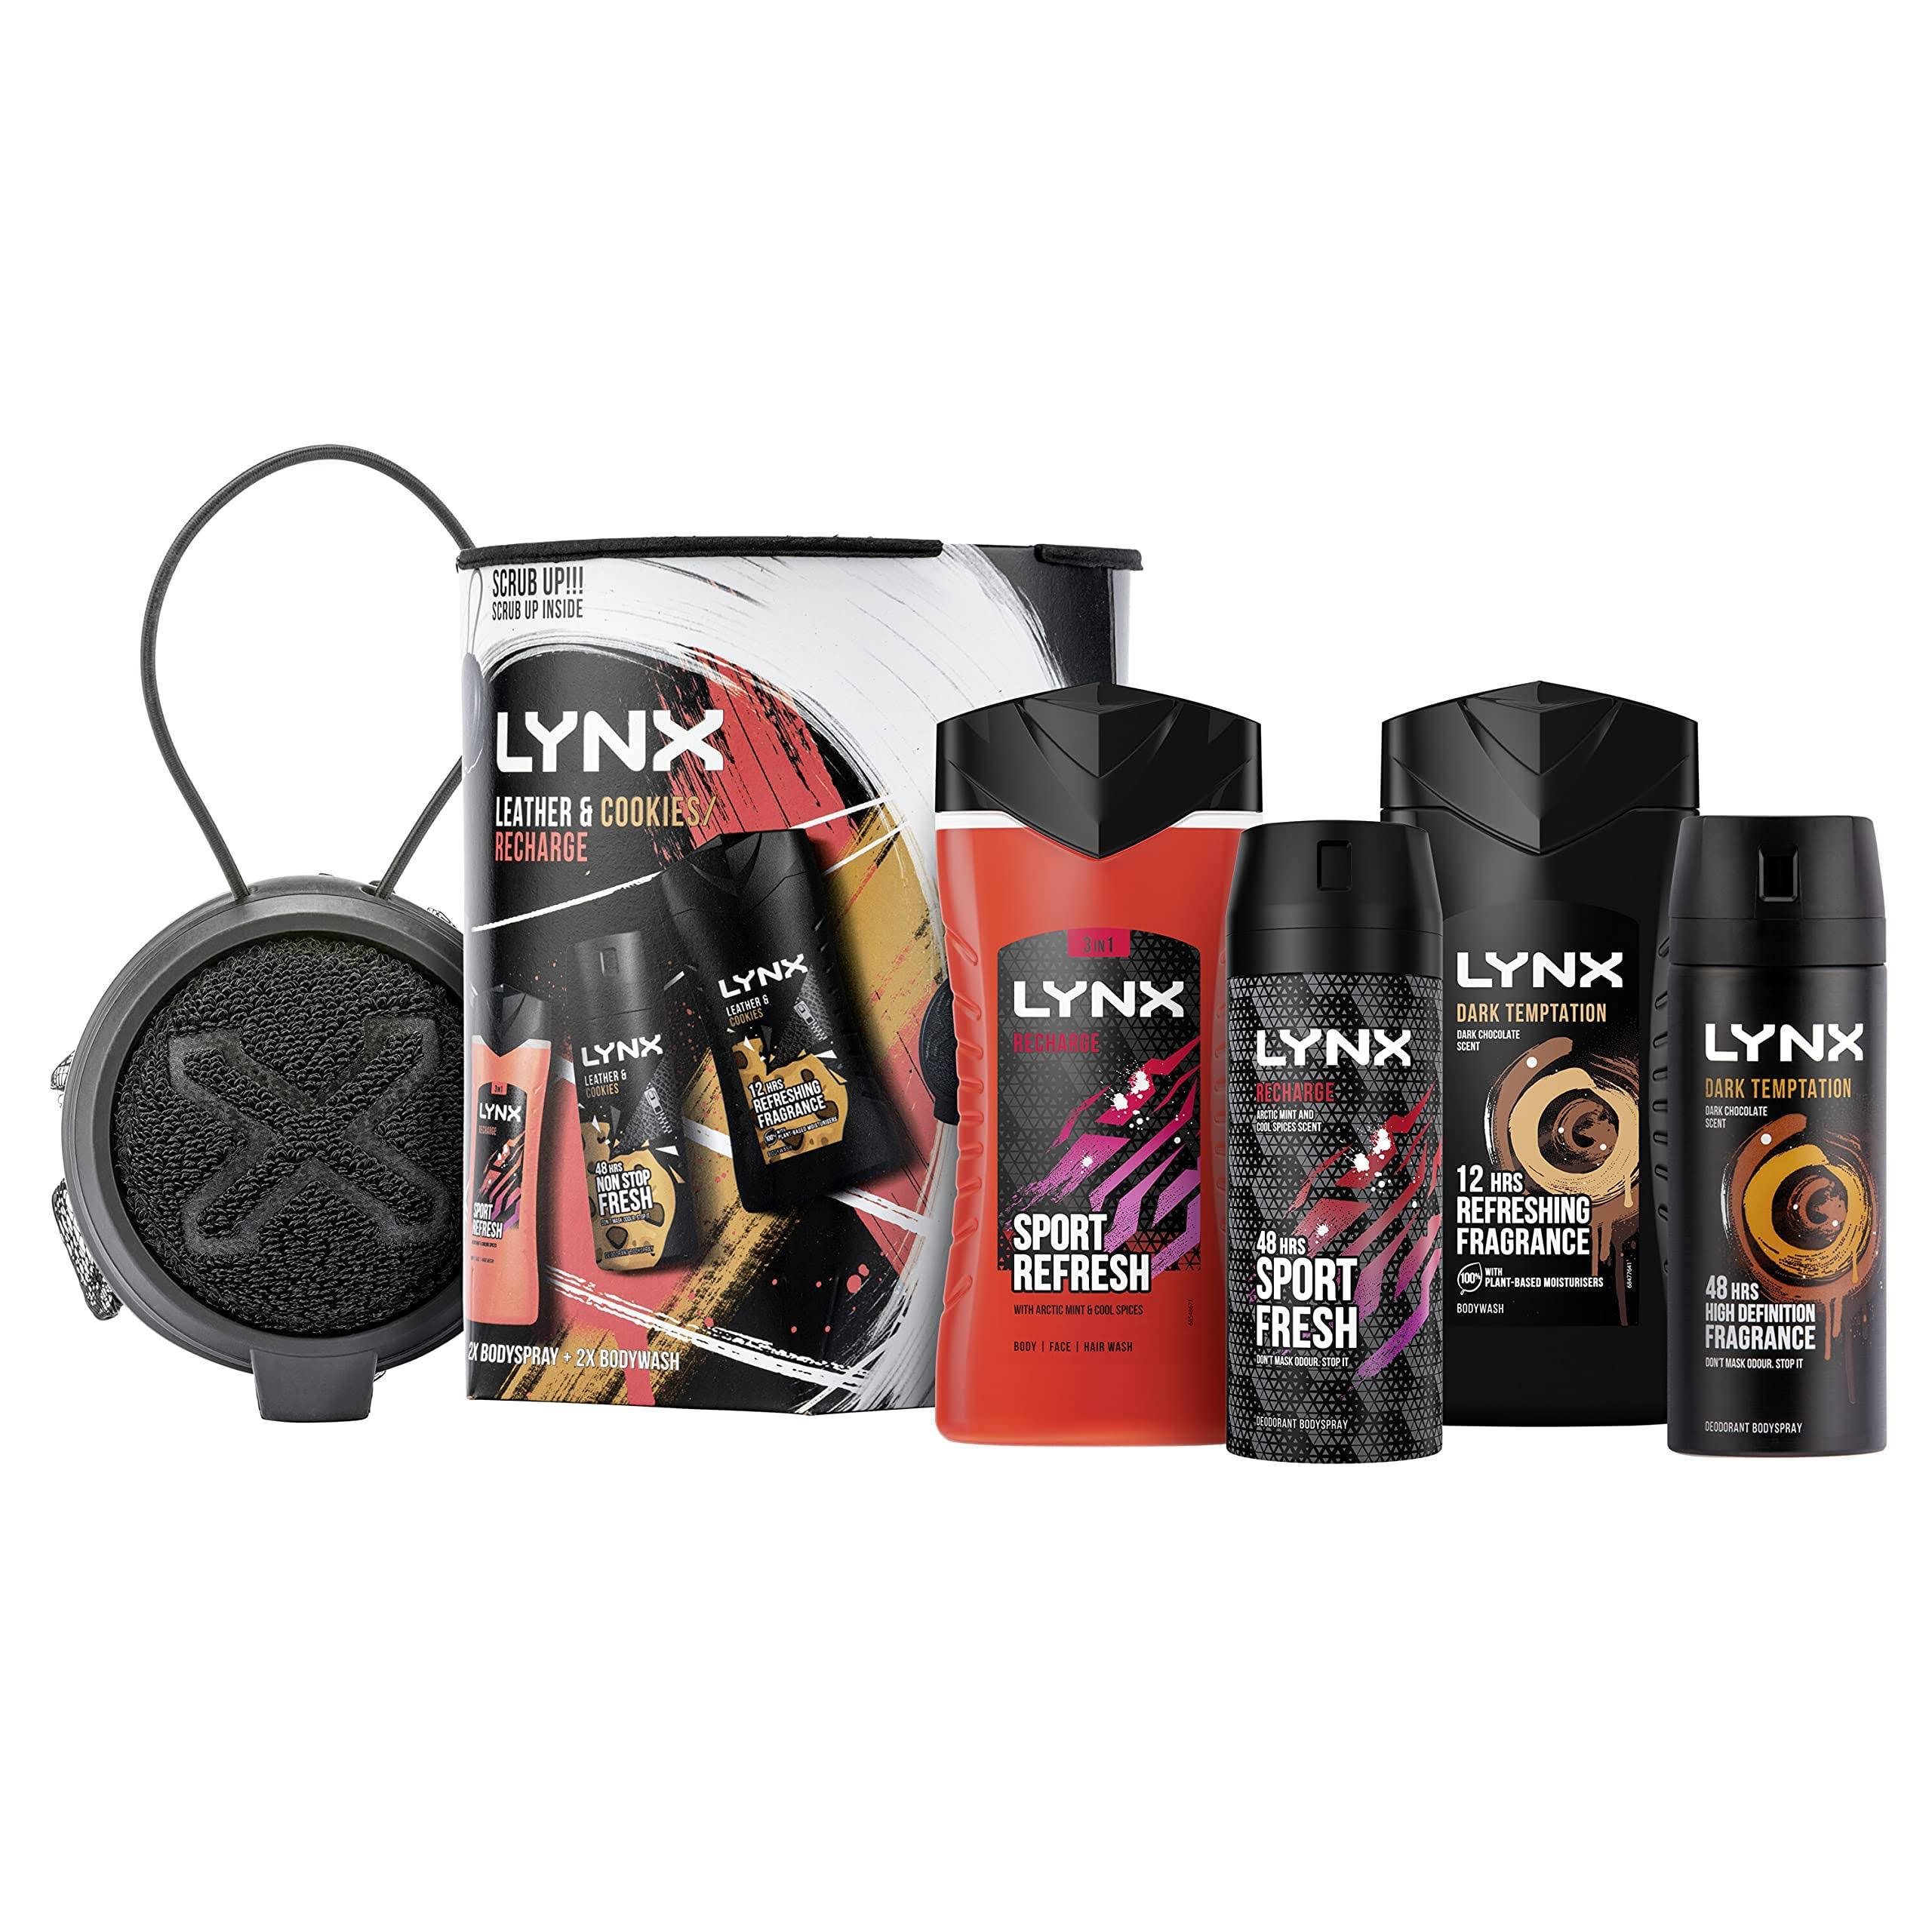 Lynx Recharge Collision Bumper Pack Gift Set Shower Gel Deodorant Body Scrub